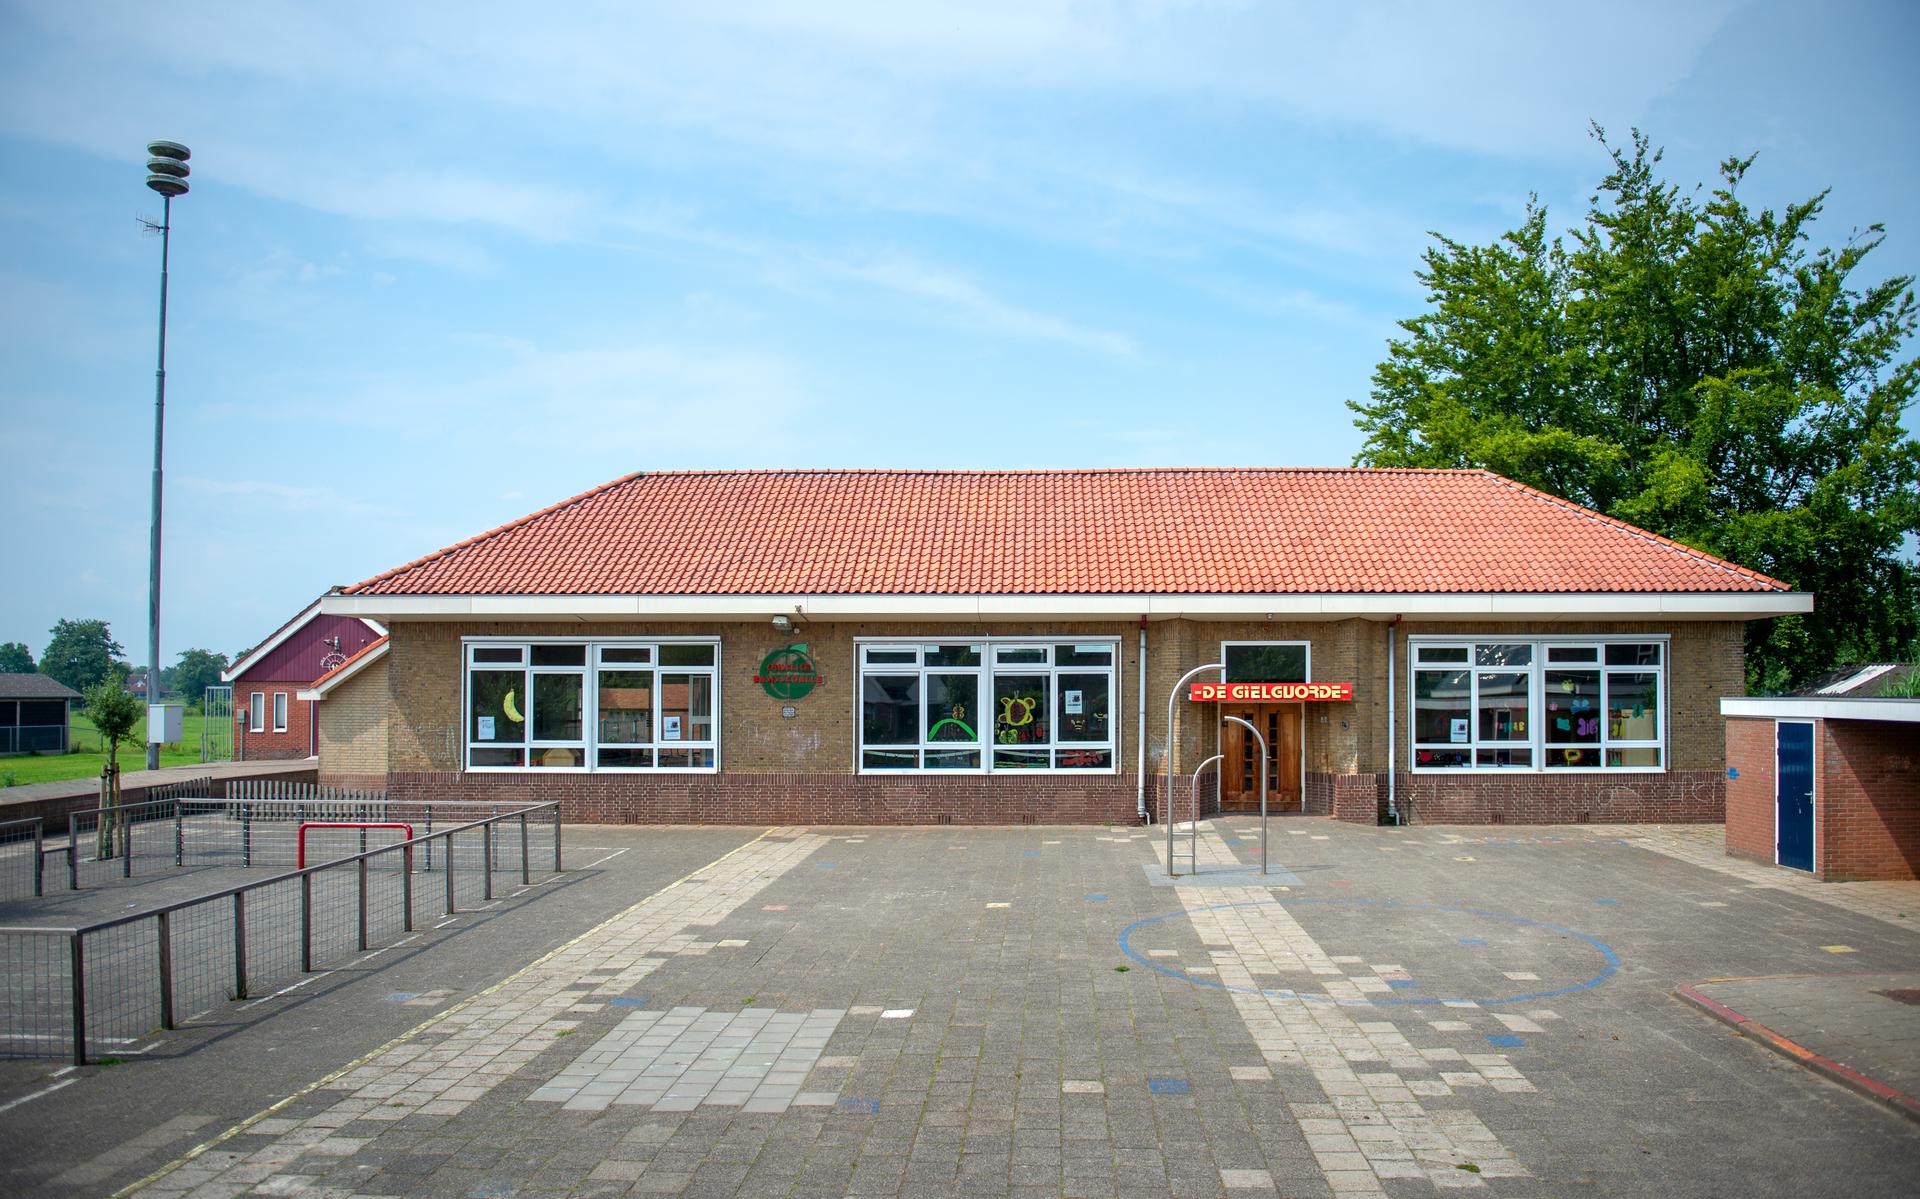  Basisschool De Gielguorde in De Tike.